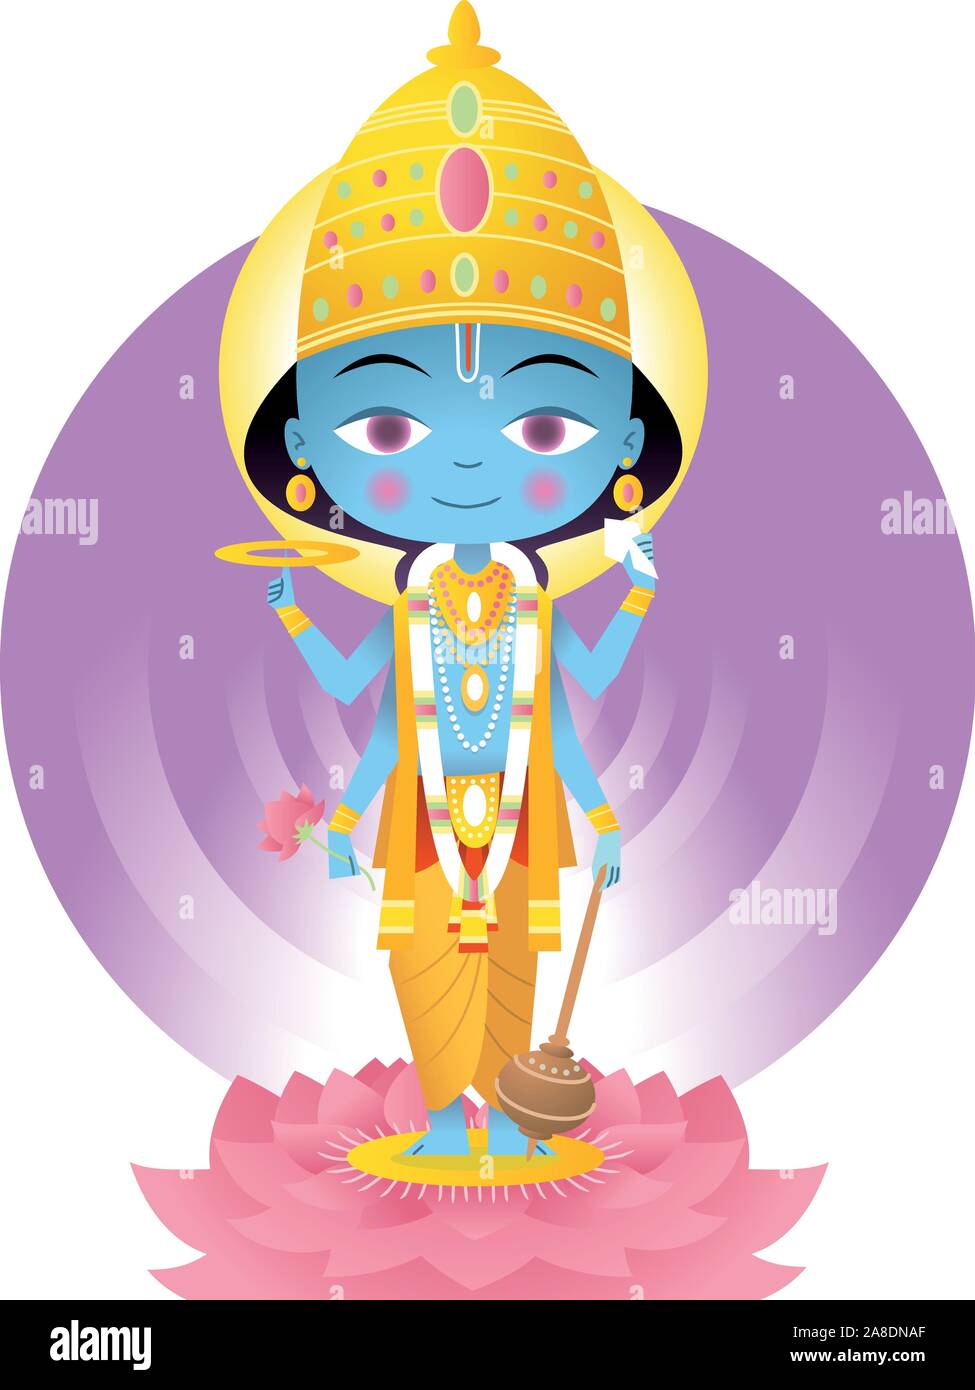 Hindu god vishnu cartoon illustration Stock Vector Image & Art - Alamy